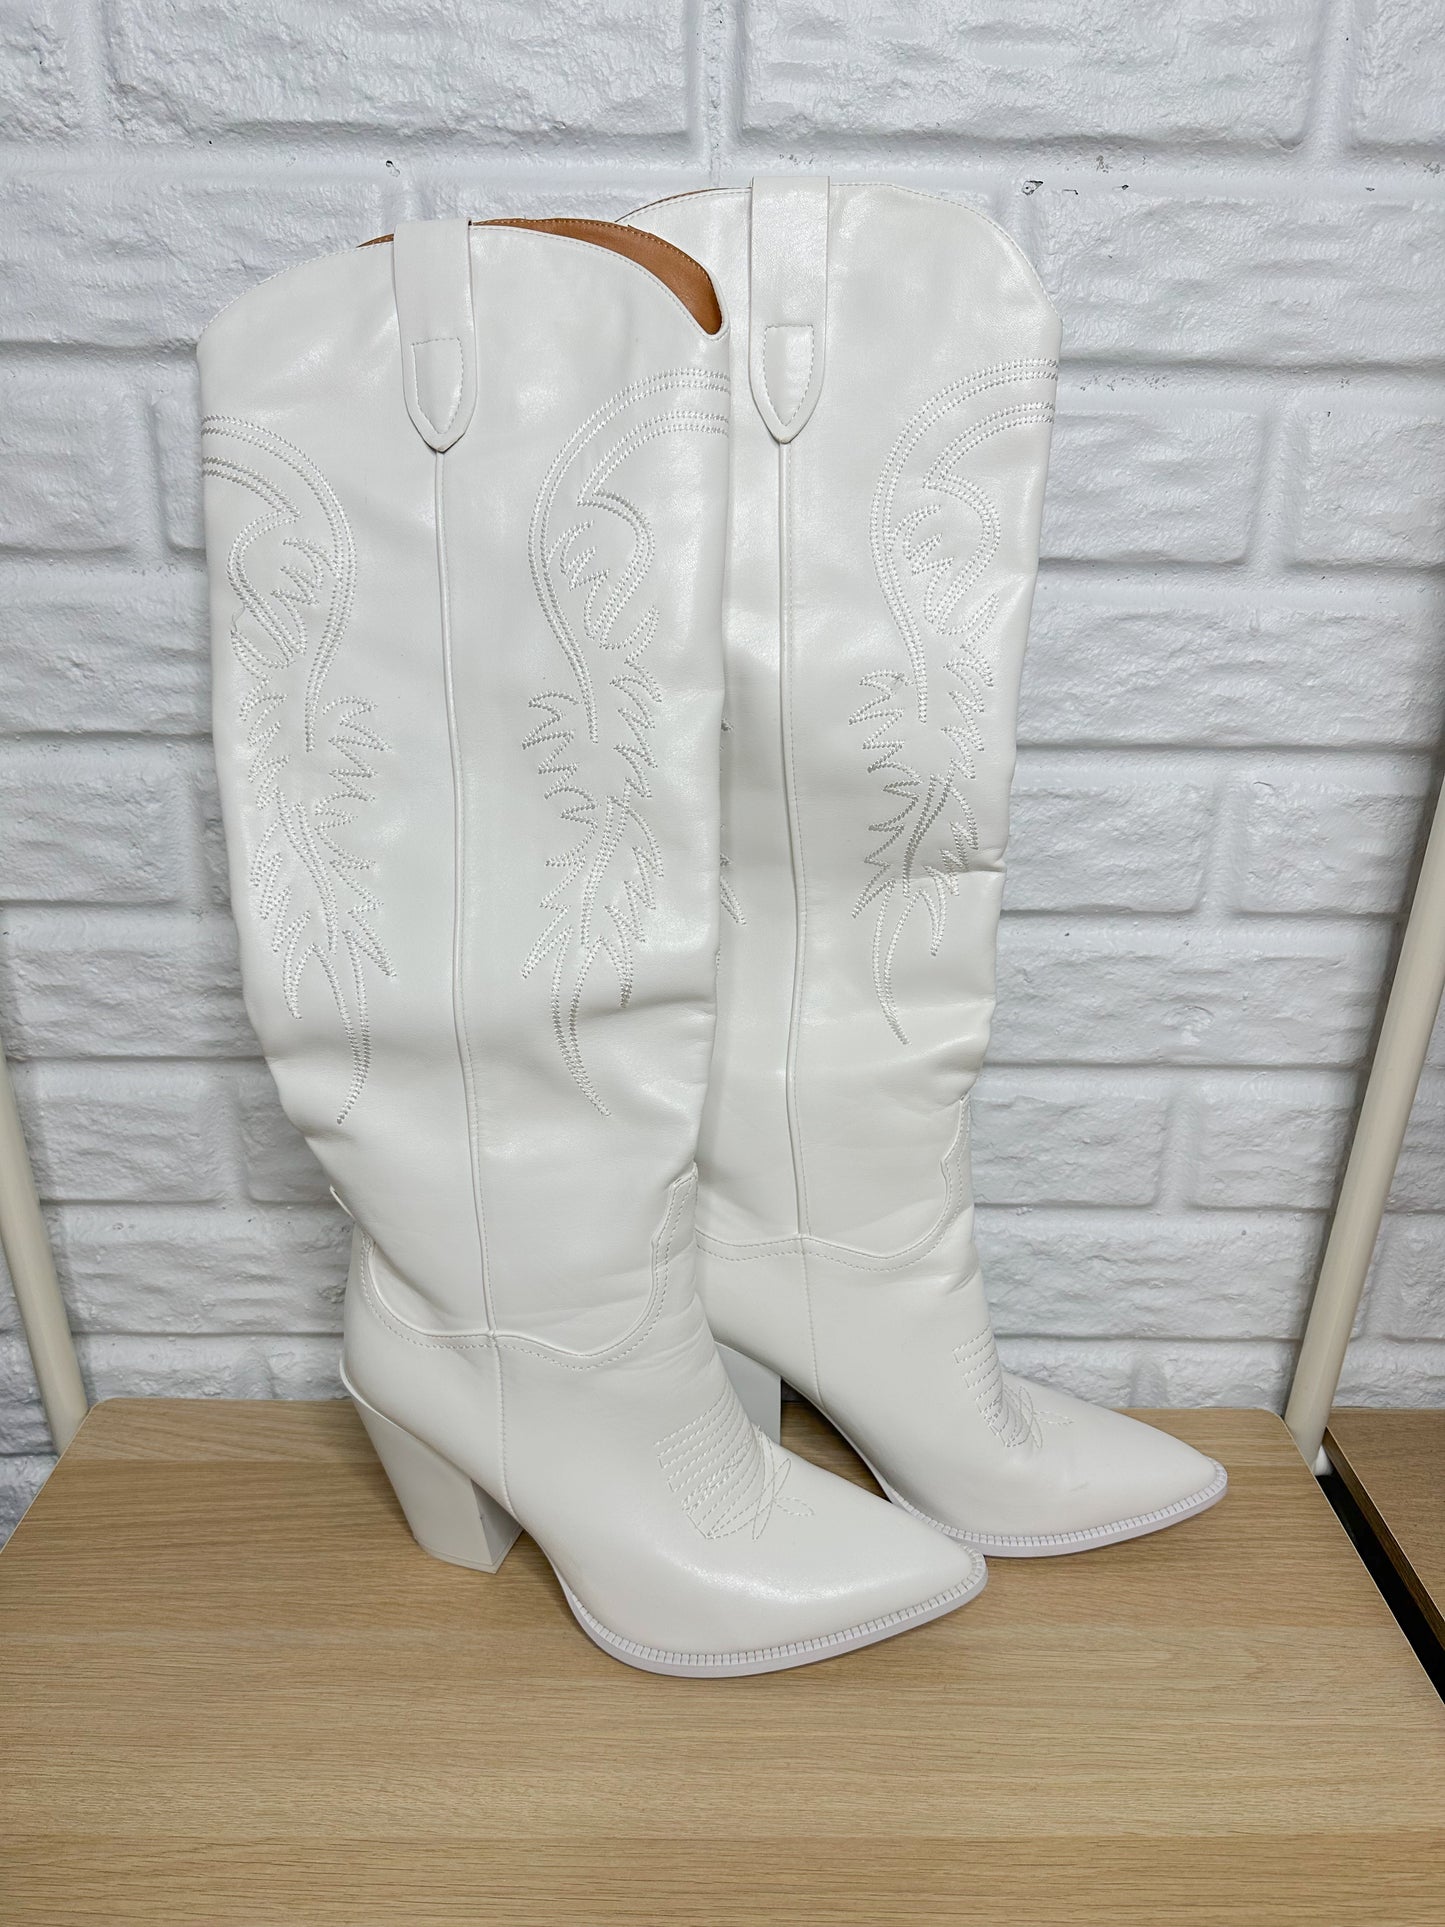 ISNOM White Western Boots Size 9.5